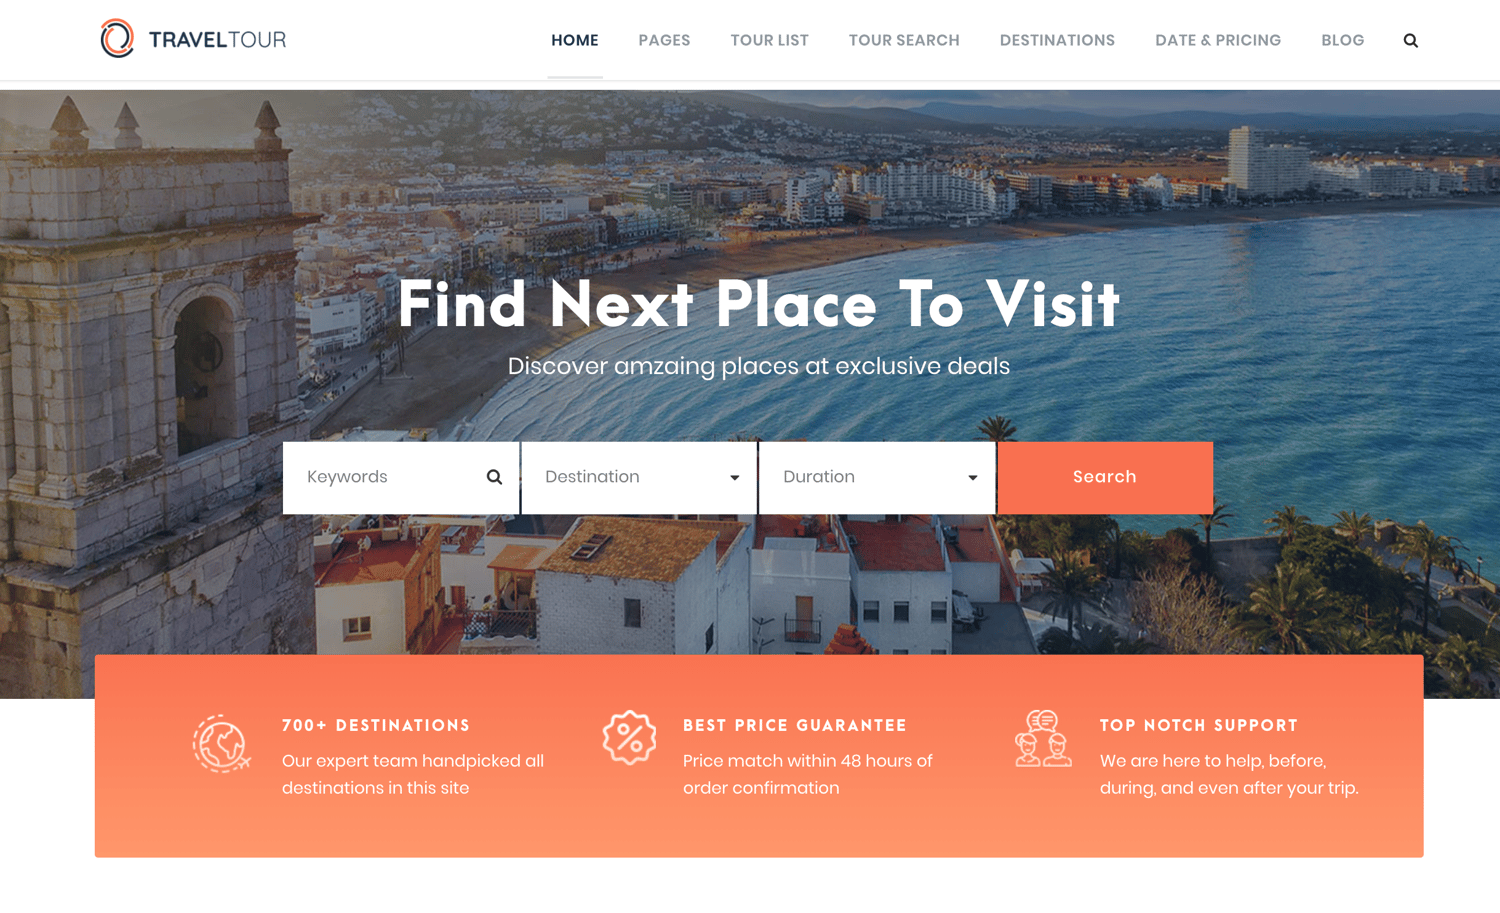 Travel Tour theme to create travel business site using WordPress